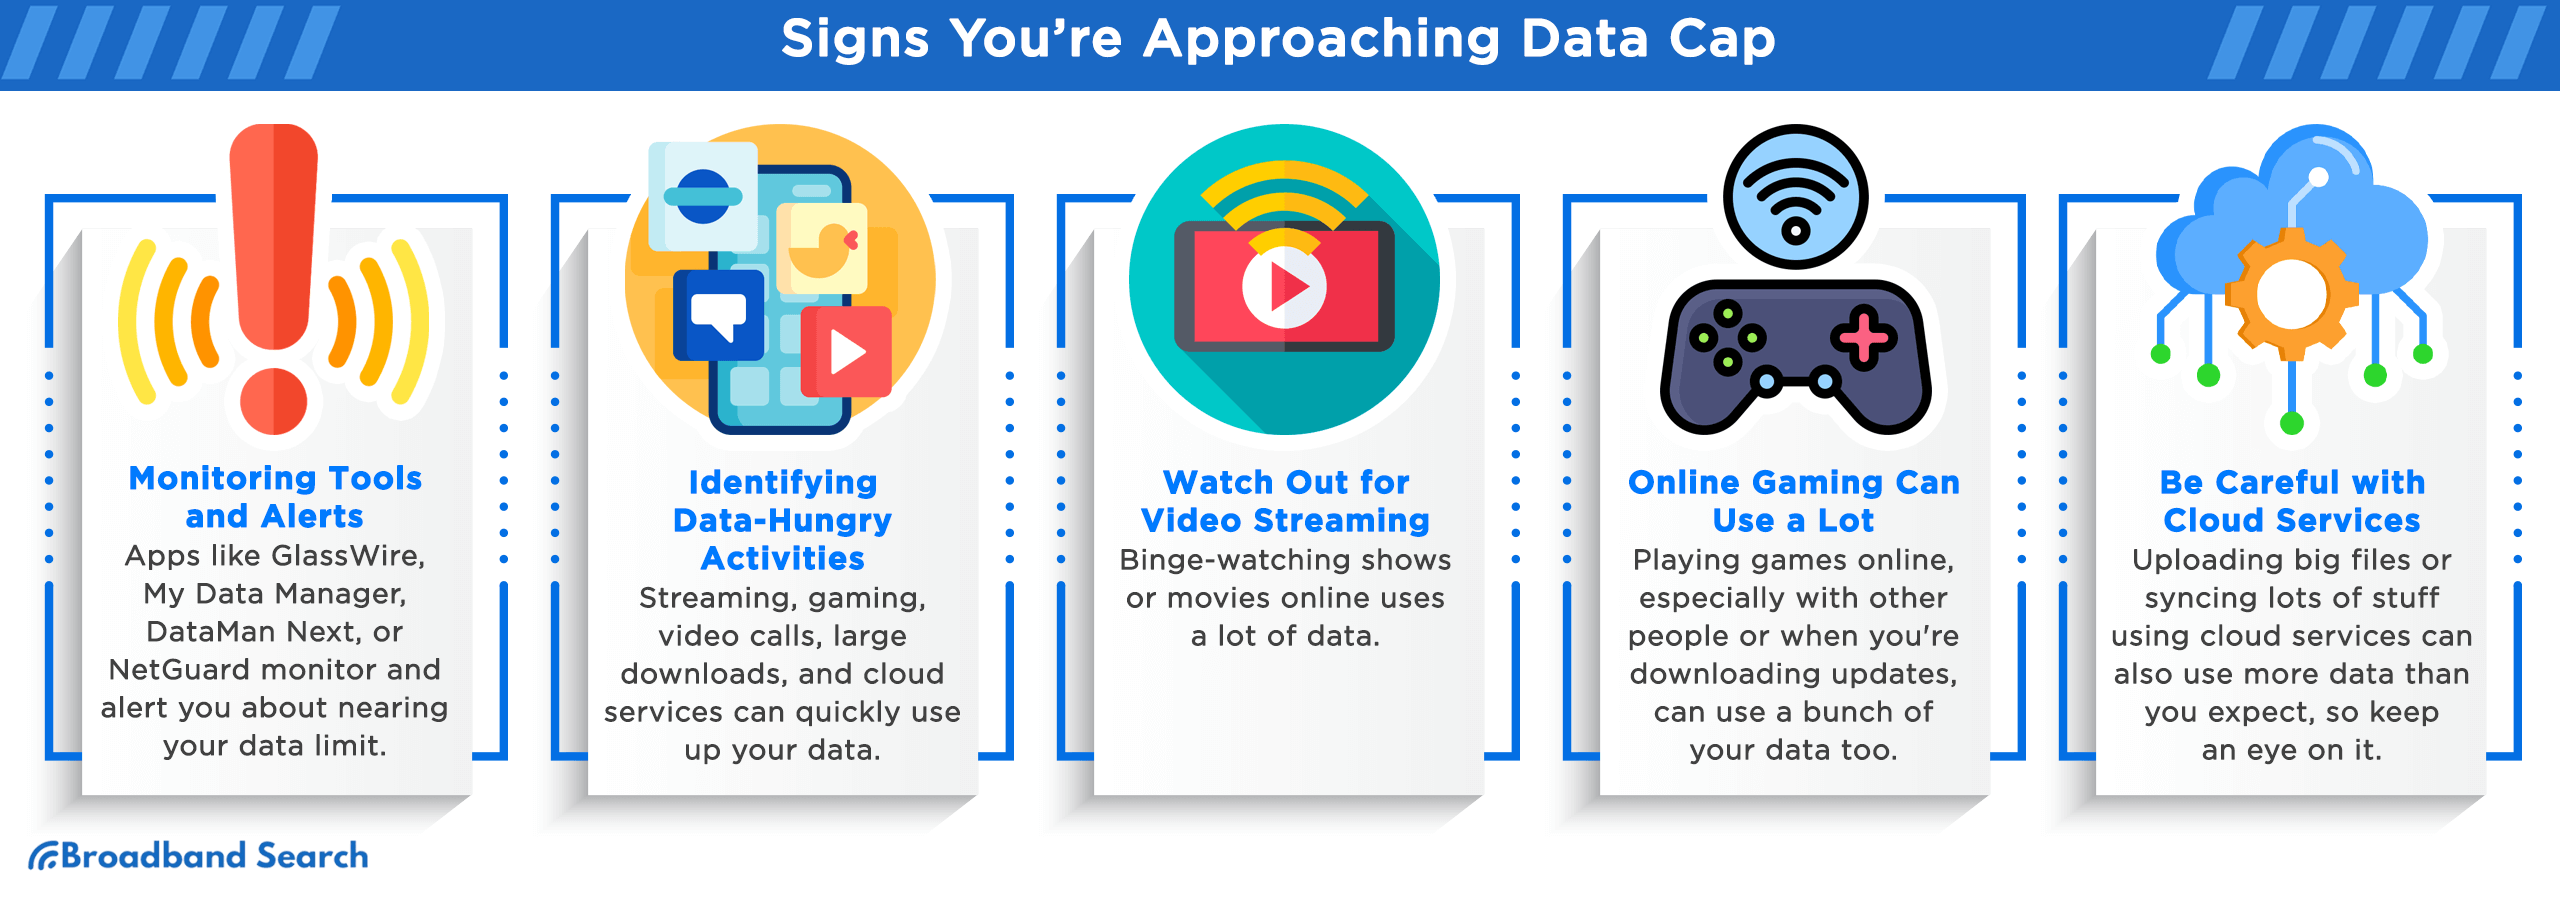 Signs you're approaching data cap